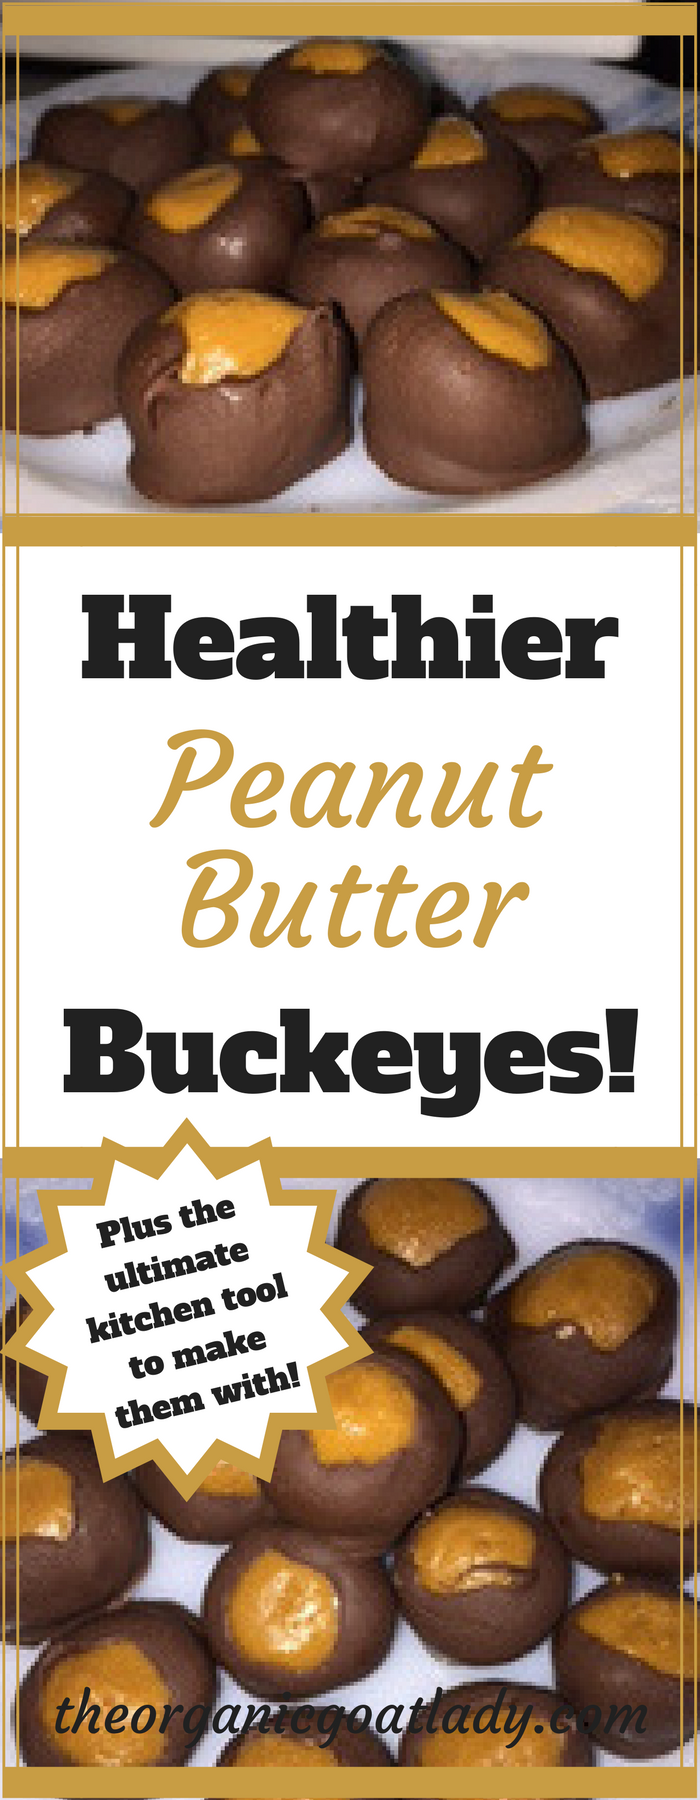 Healthier Peanut Butter Buckeyes!